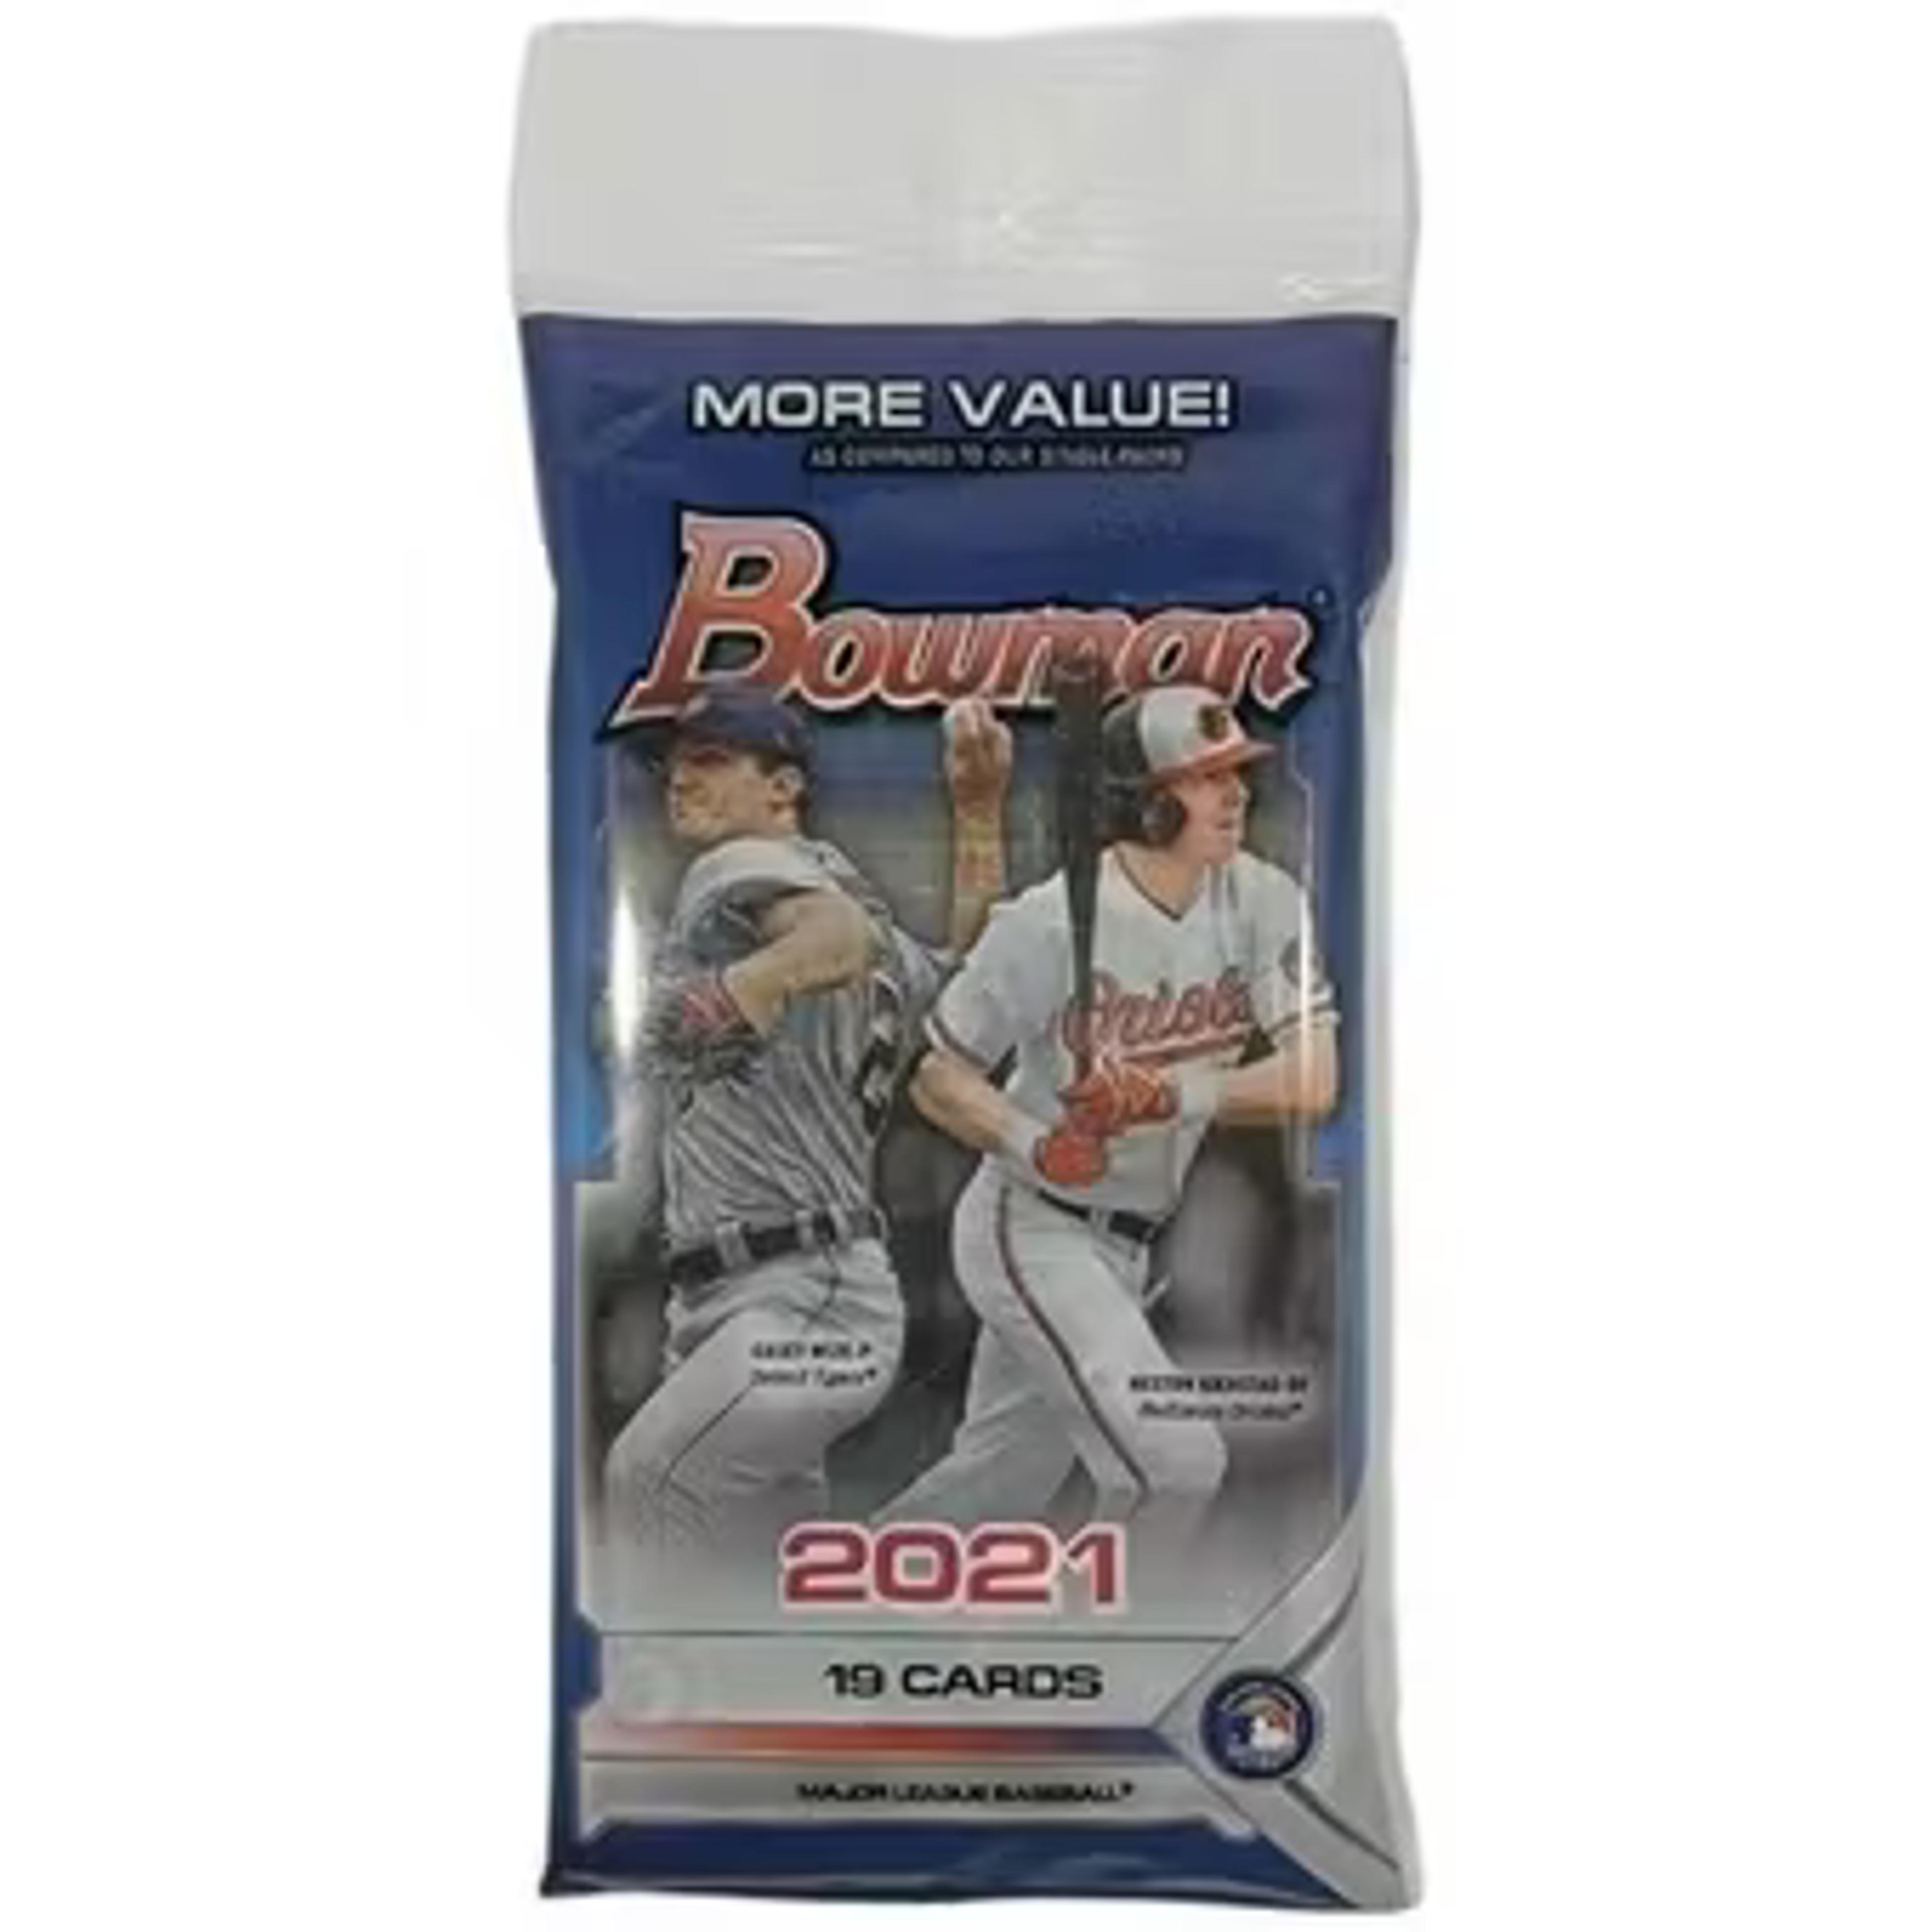 2021 Bowman Baseball Fat Jumbo Value Pack (19 Cards)